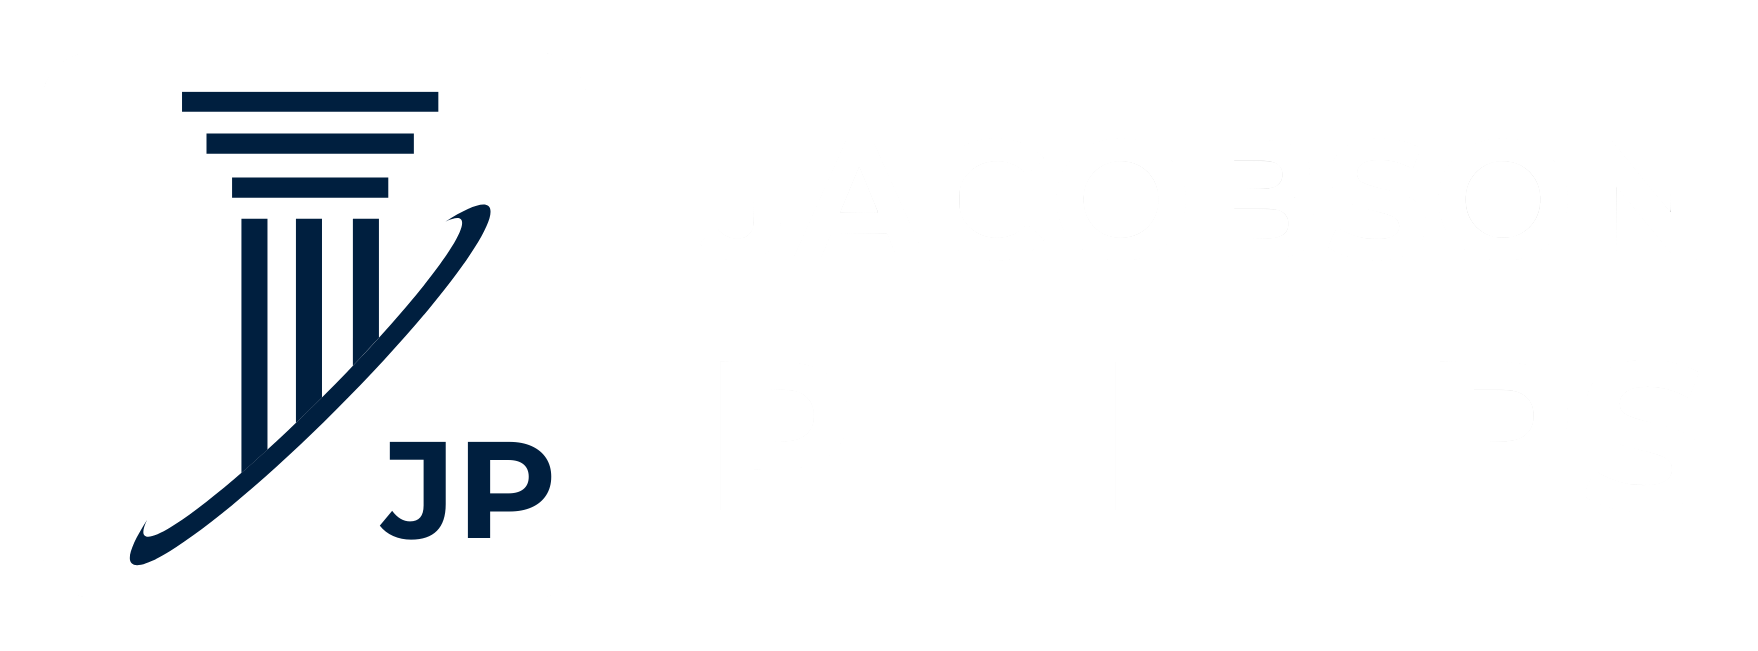 Jacobson Phillips PLLC